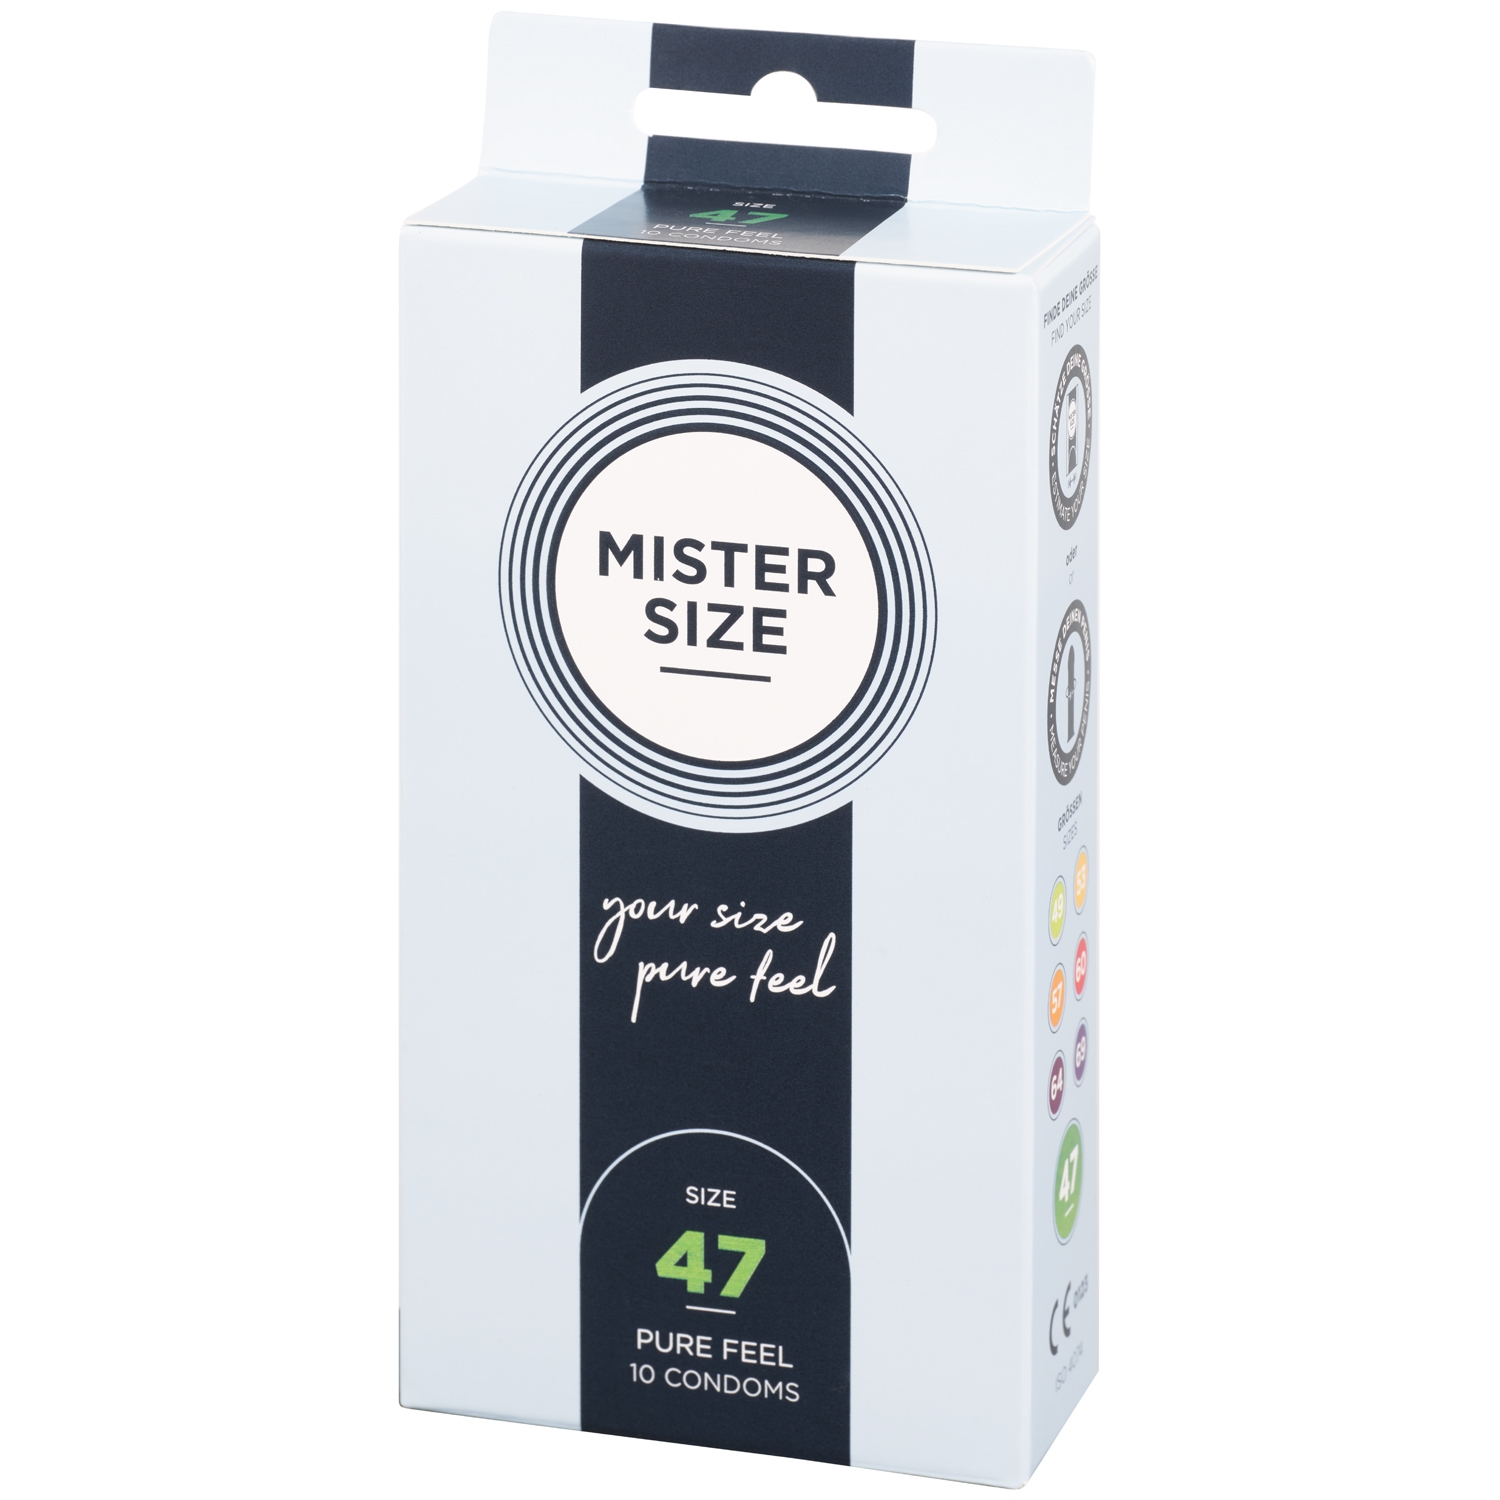 Mister Size Pure Feel Kondomer 10 stk     - Klar - 47mm